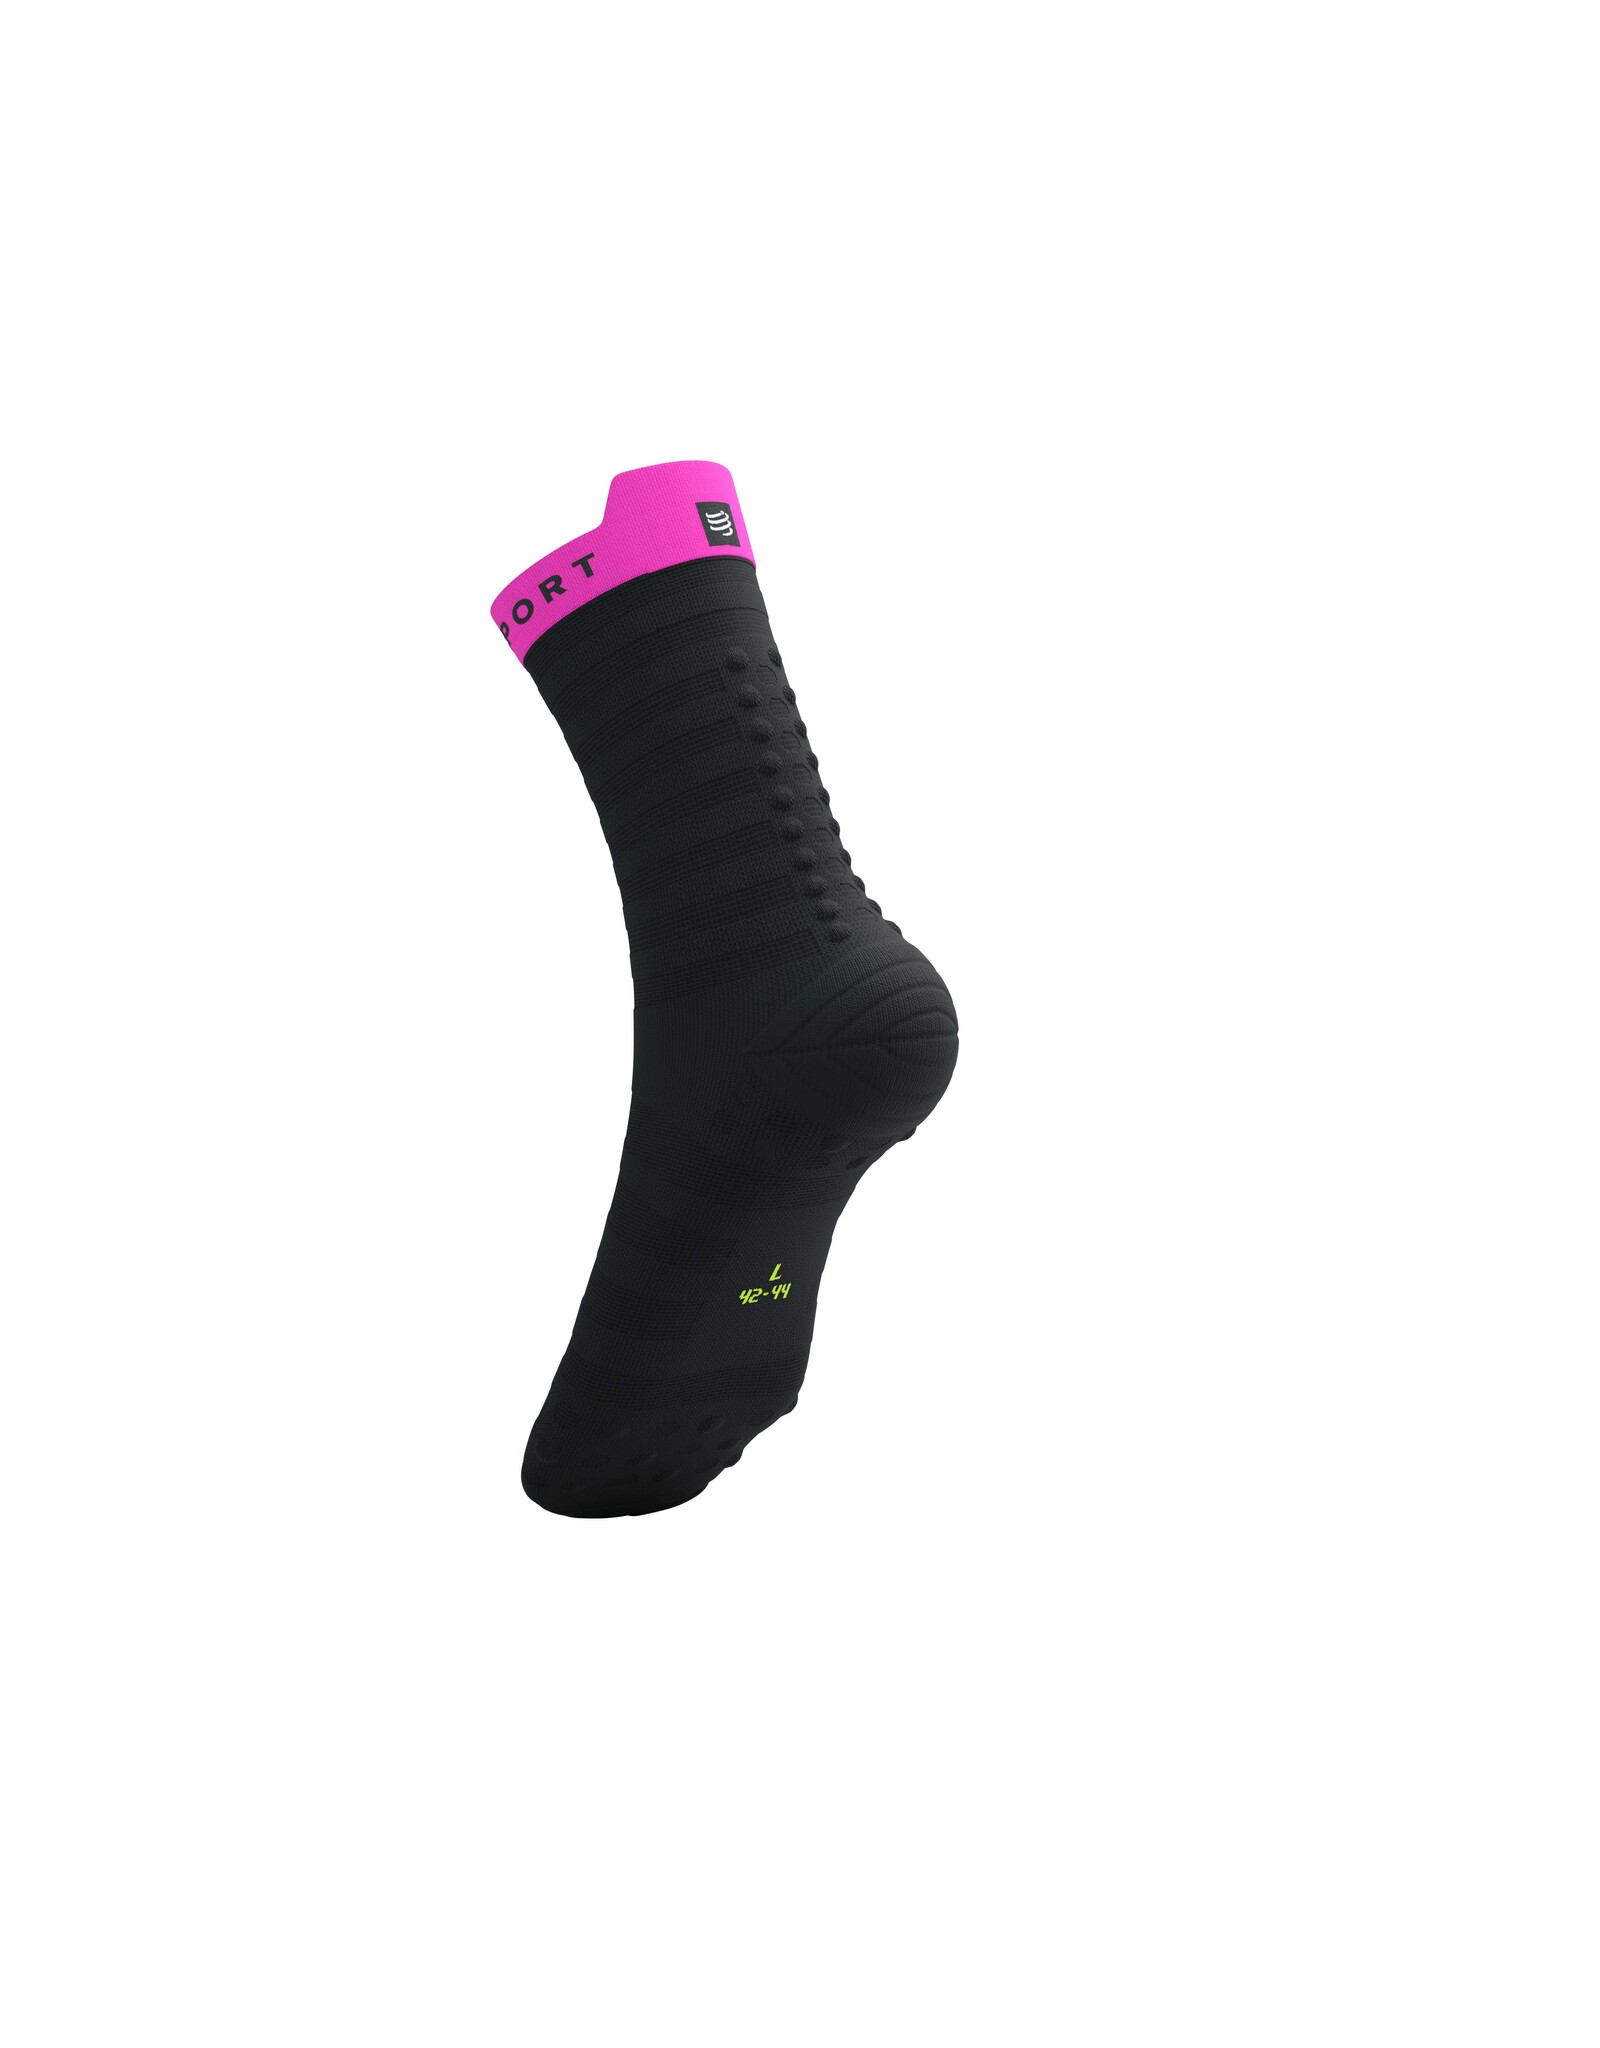 Compressport Pro Racing Socks v4.0 Ultralight Run High - Black/Safety Yellow/Neon Pink